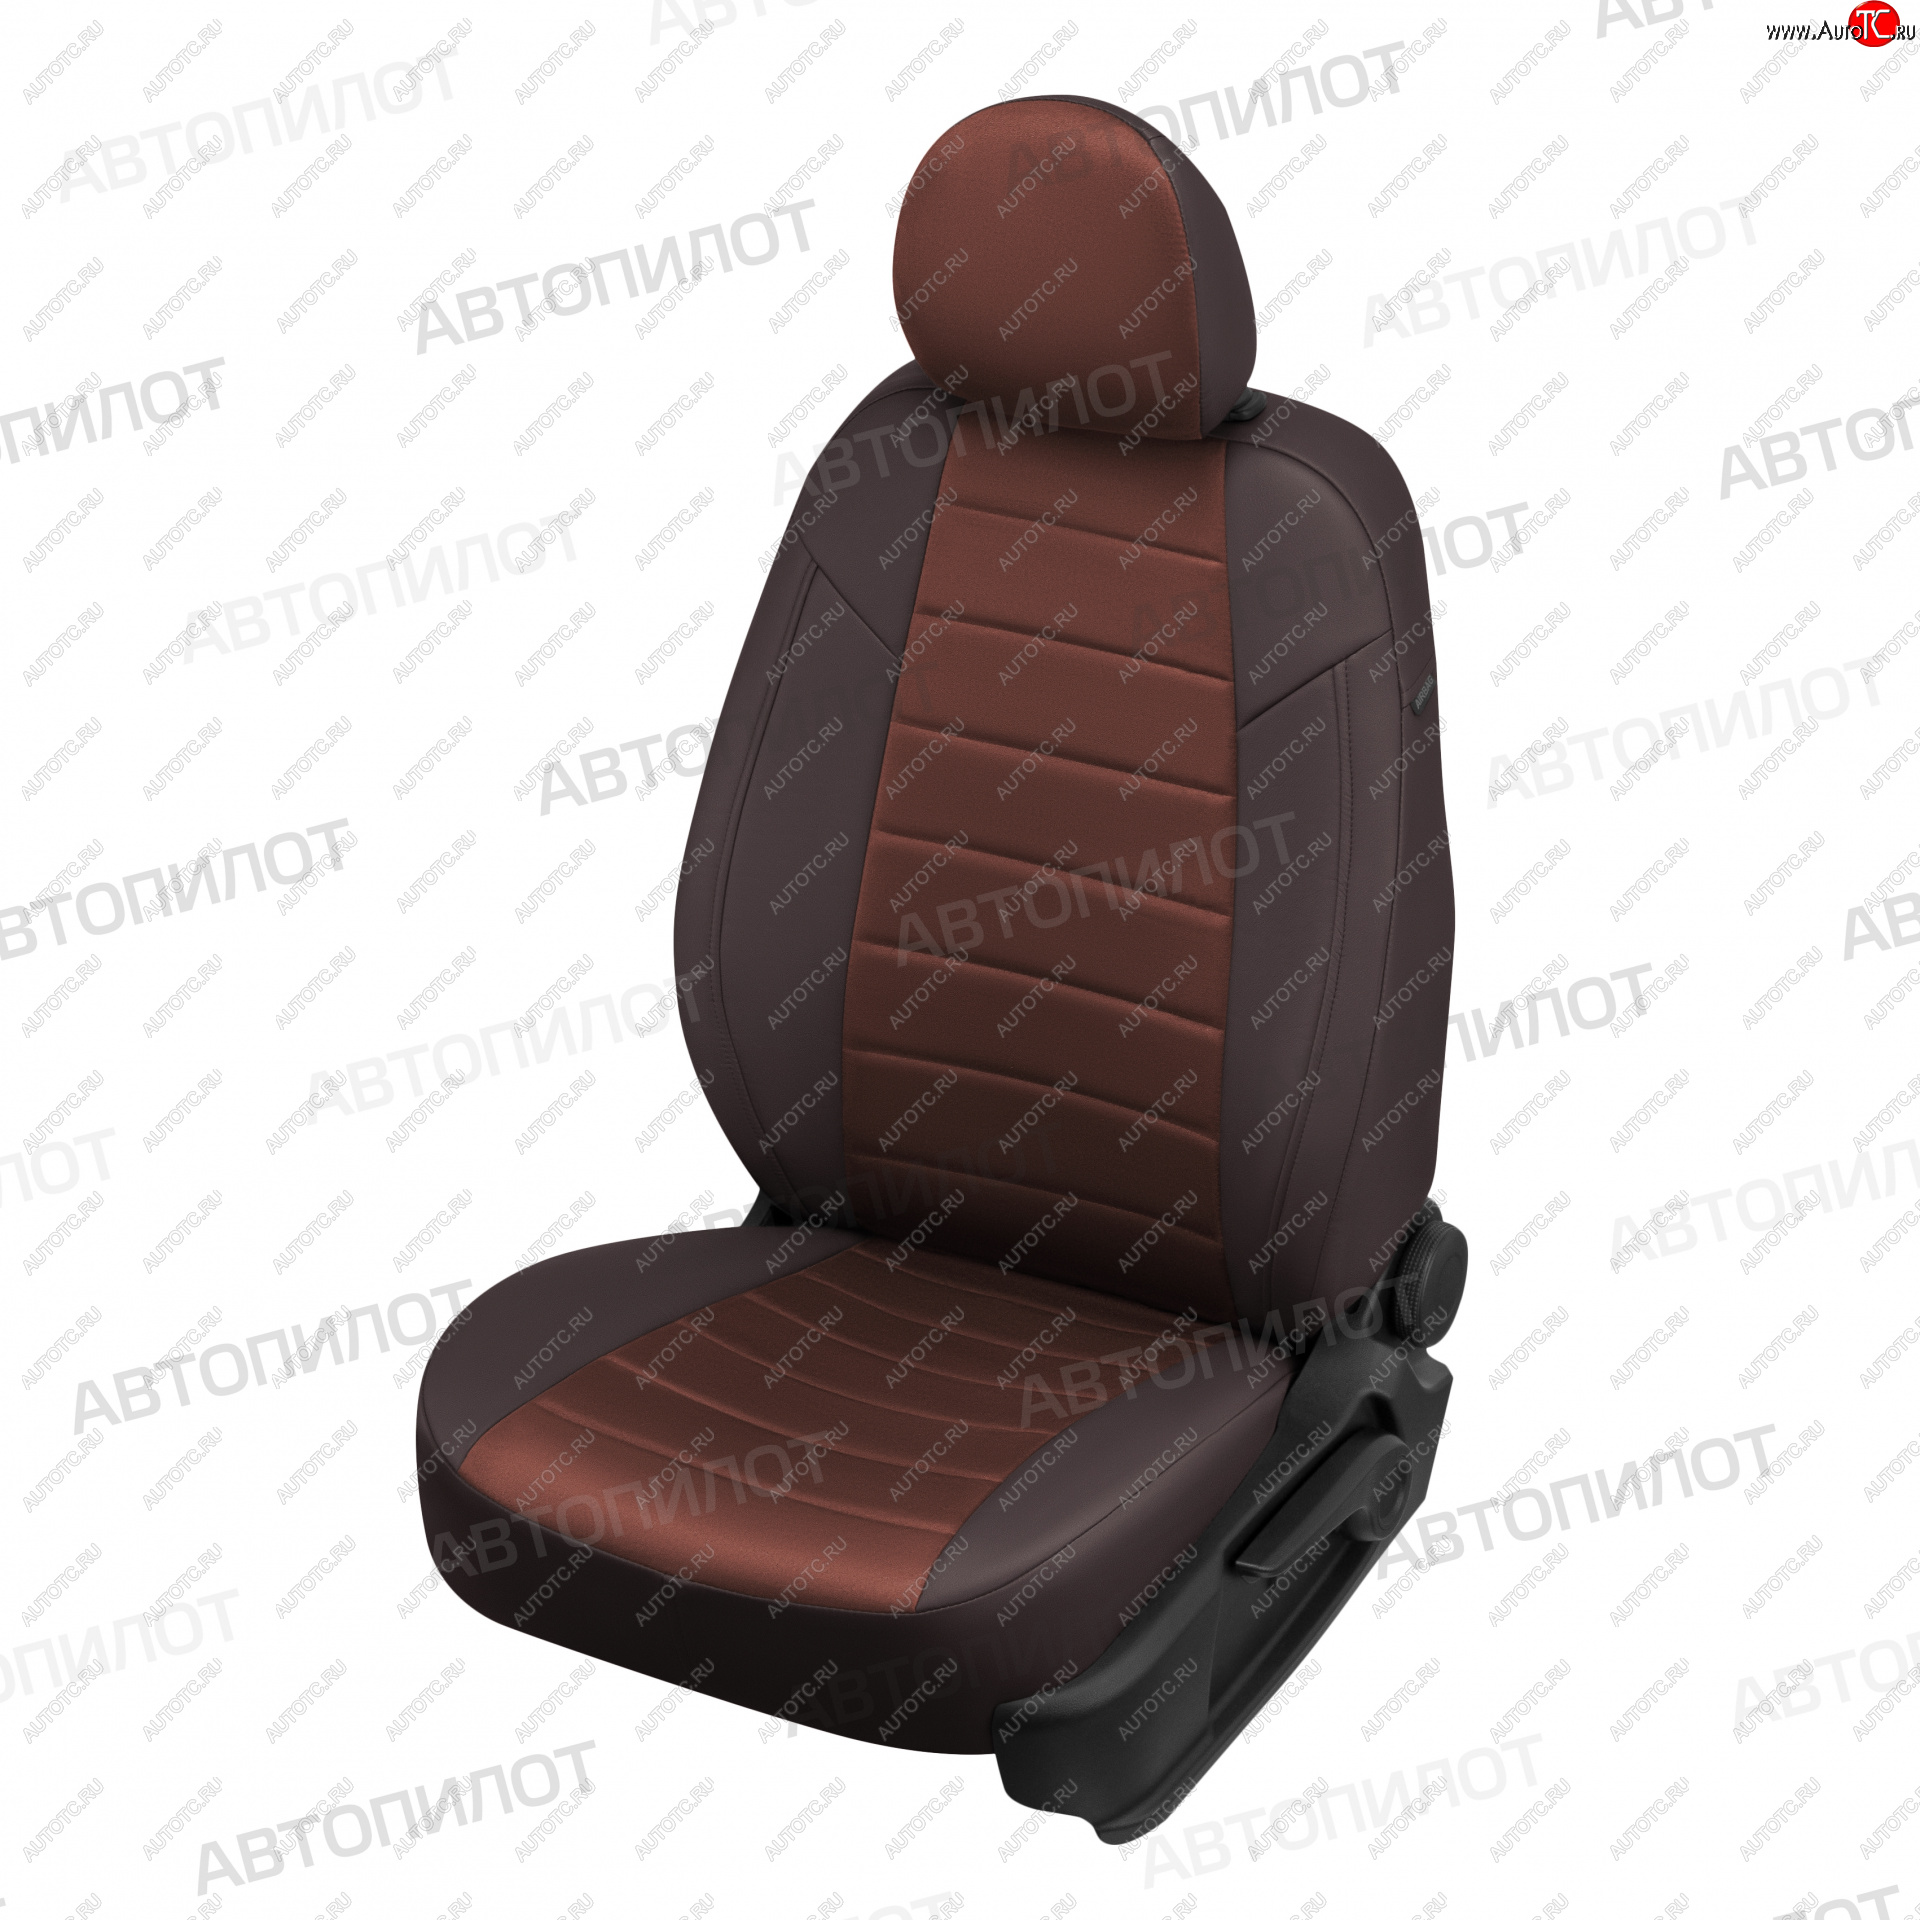 13 449 р. Чехлы сидений (экокожа/алькантара) Автопилот  Geely Emgrand X7 (2019-2024) (шоколад)